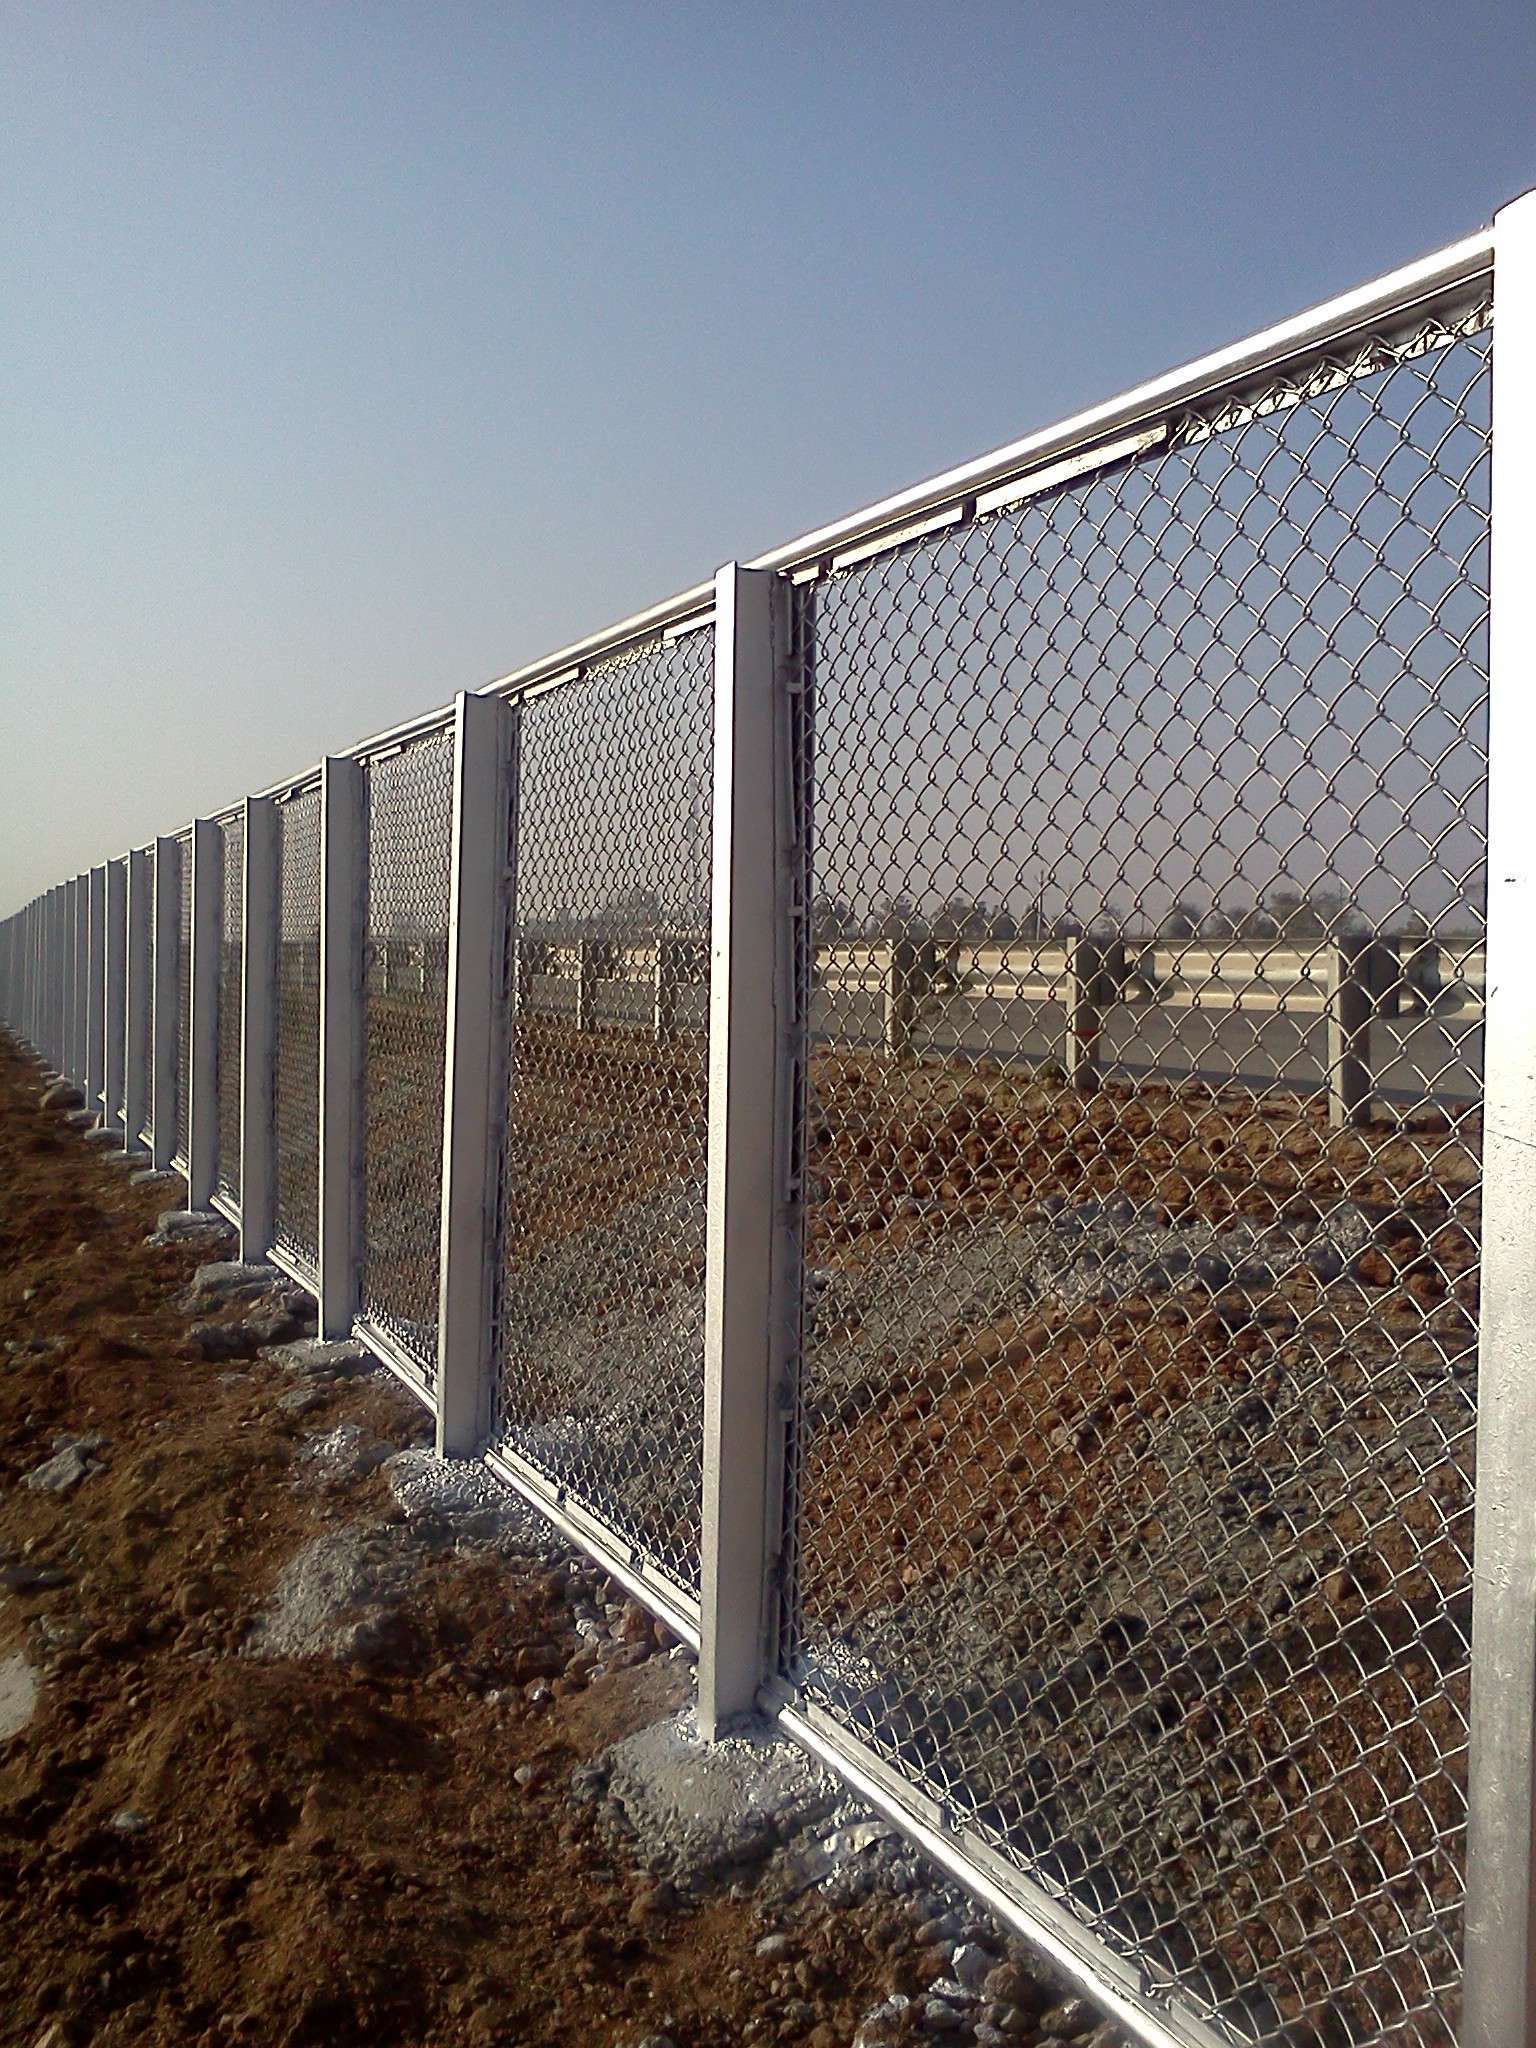 Pedestrian Guardrail & Row Fencing Solutions